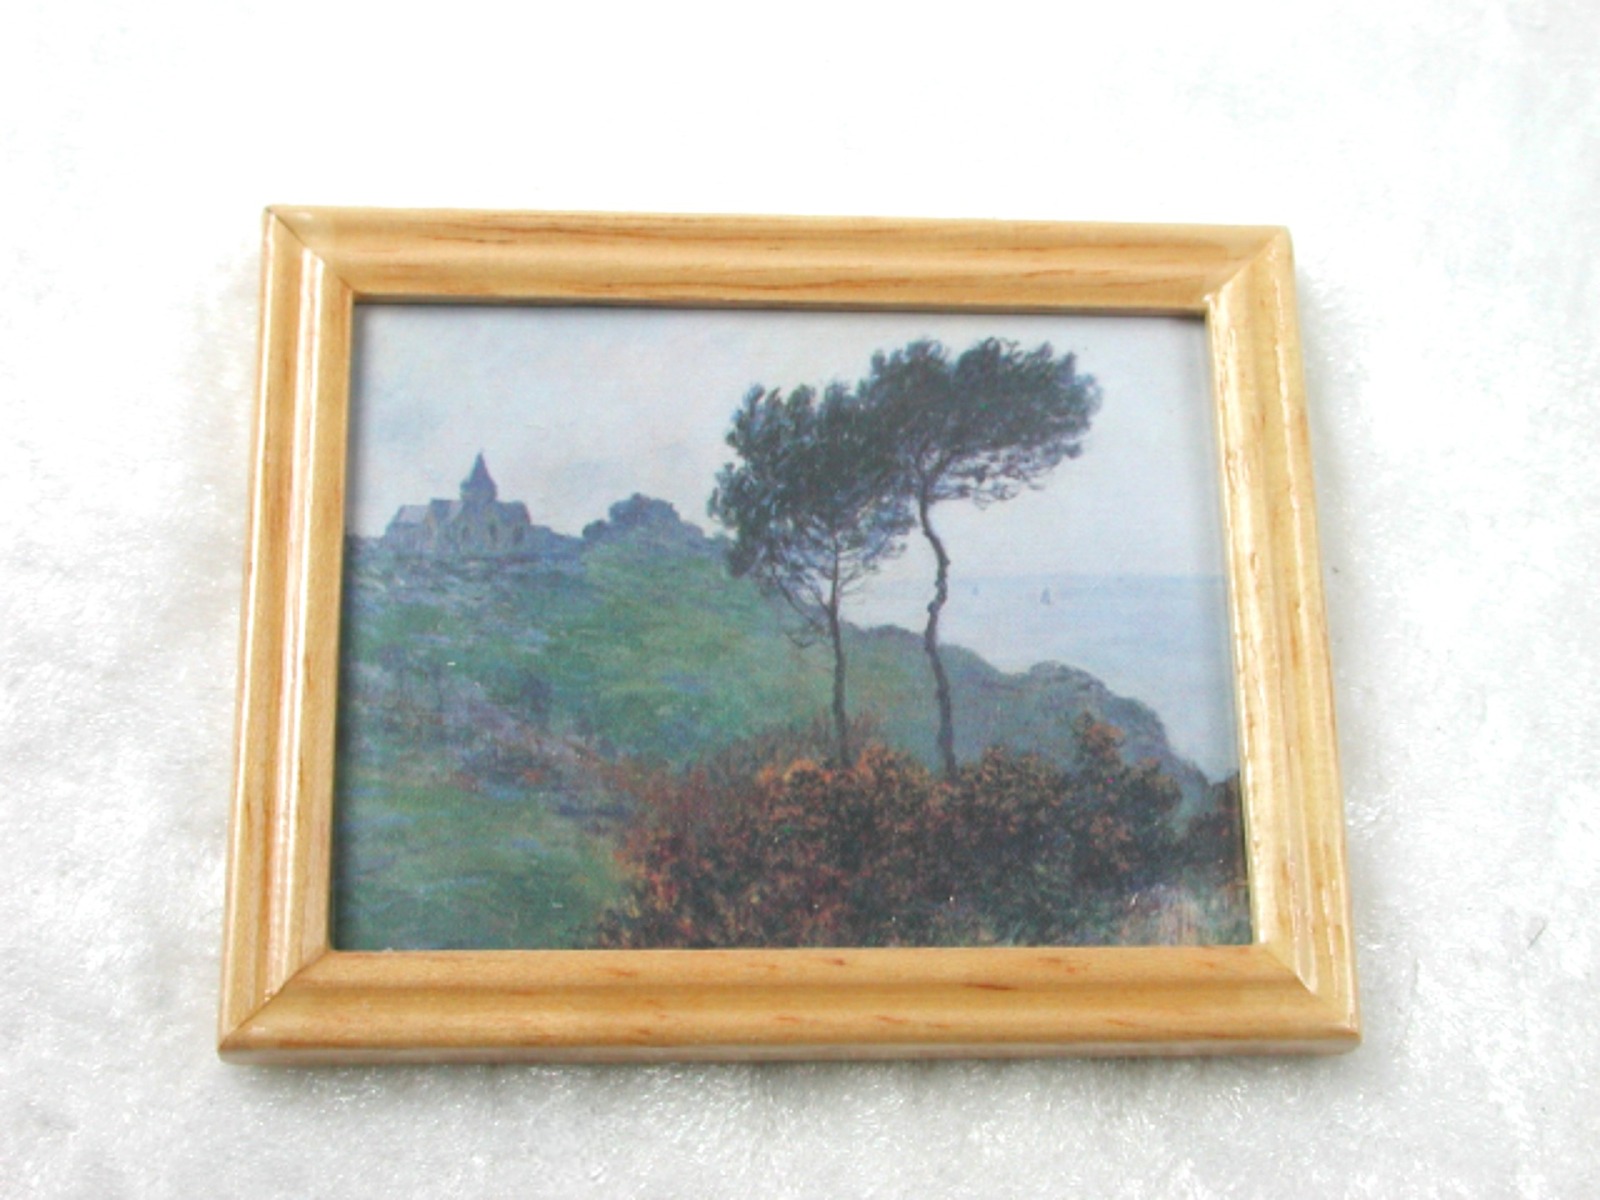 Gemäldekopie Varengeville im Holzrahmen 7 x 55 x 05 cm